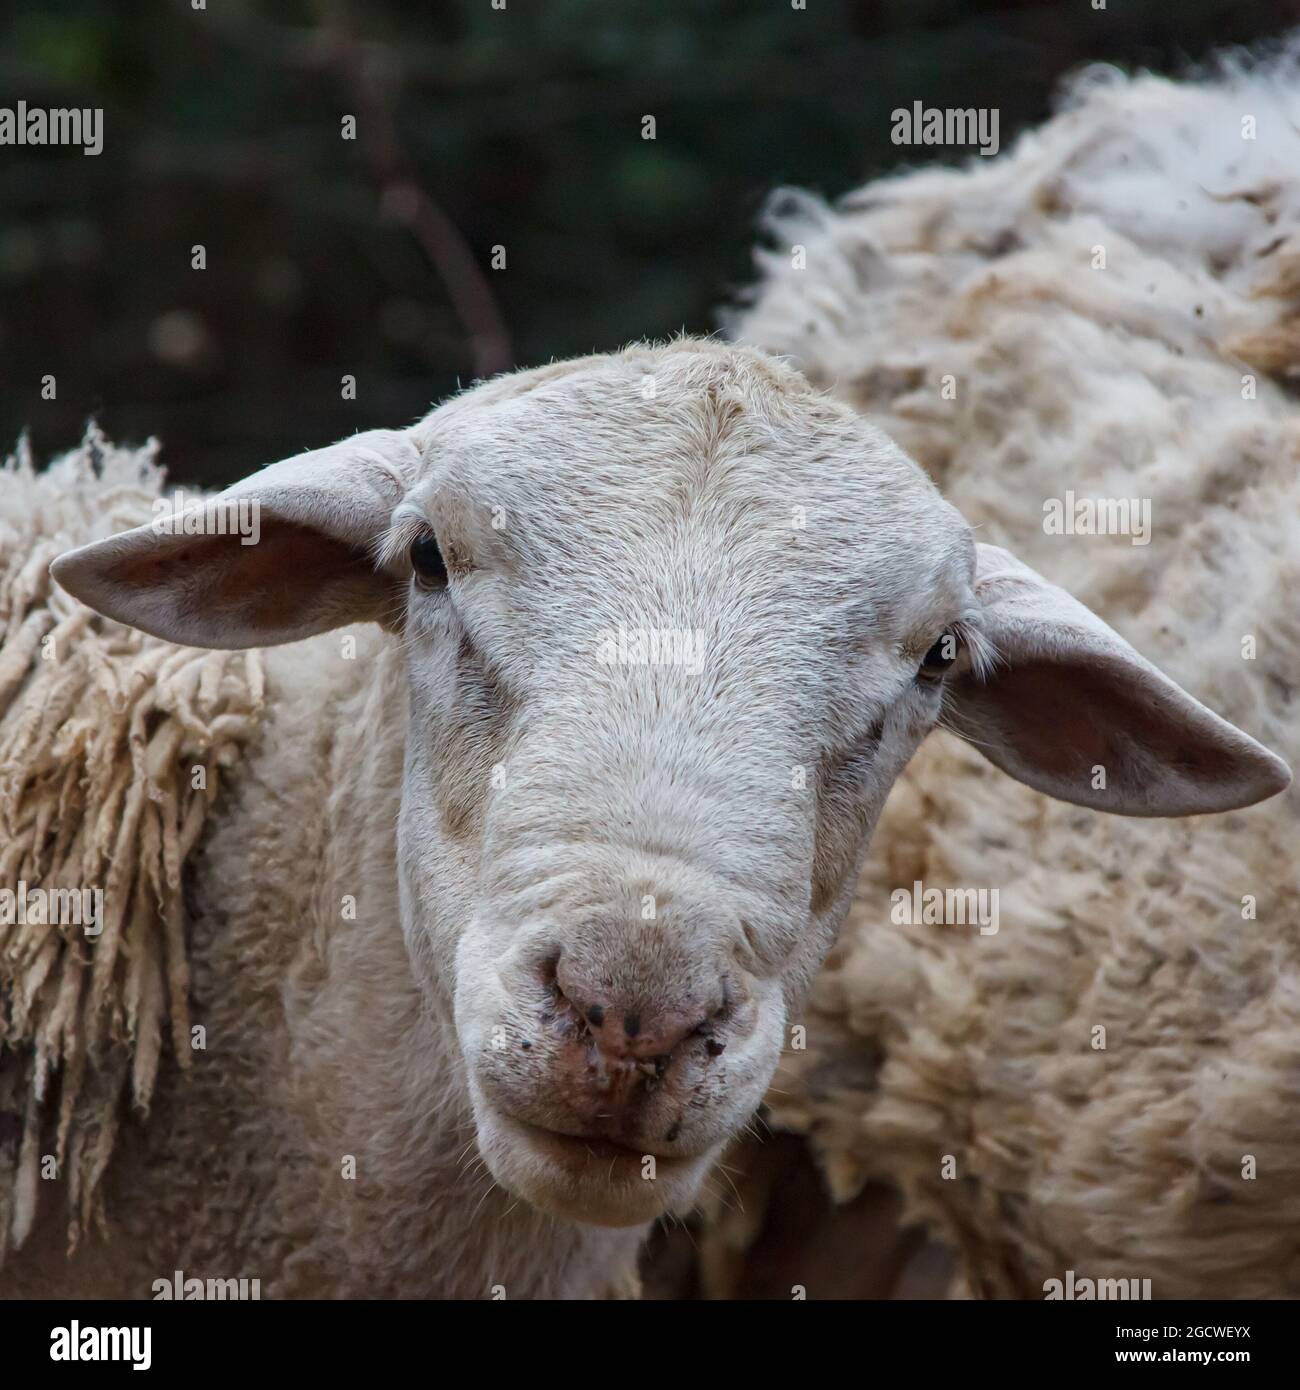 a close up dorper sheep portrait Stock Photo